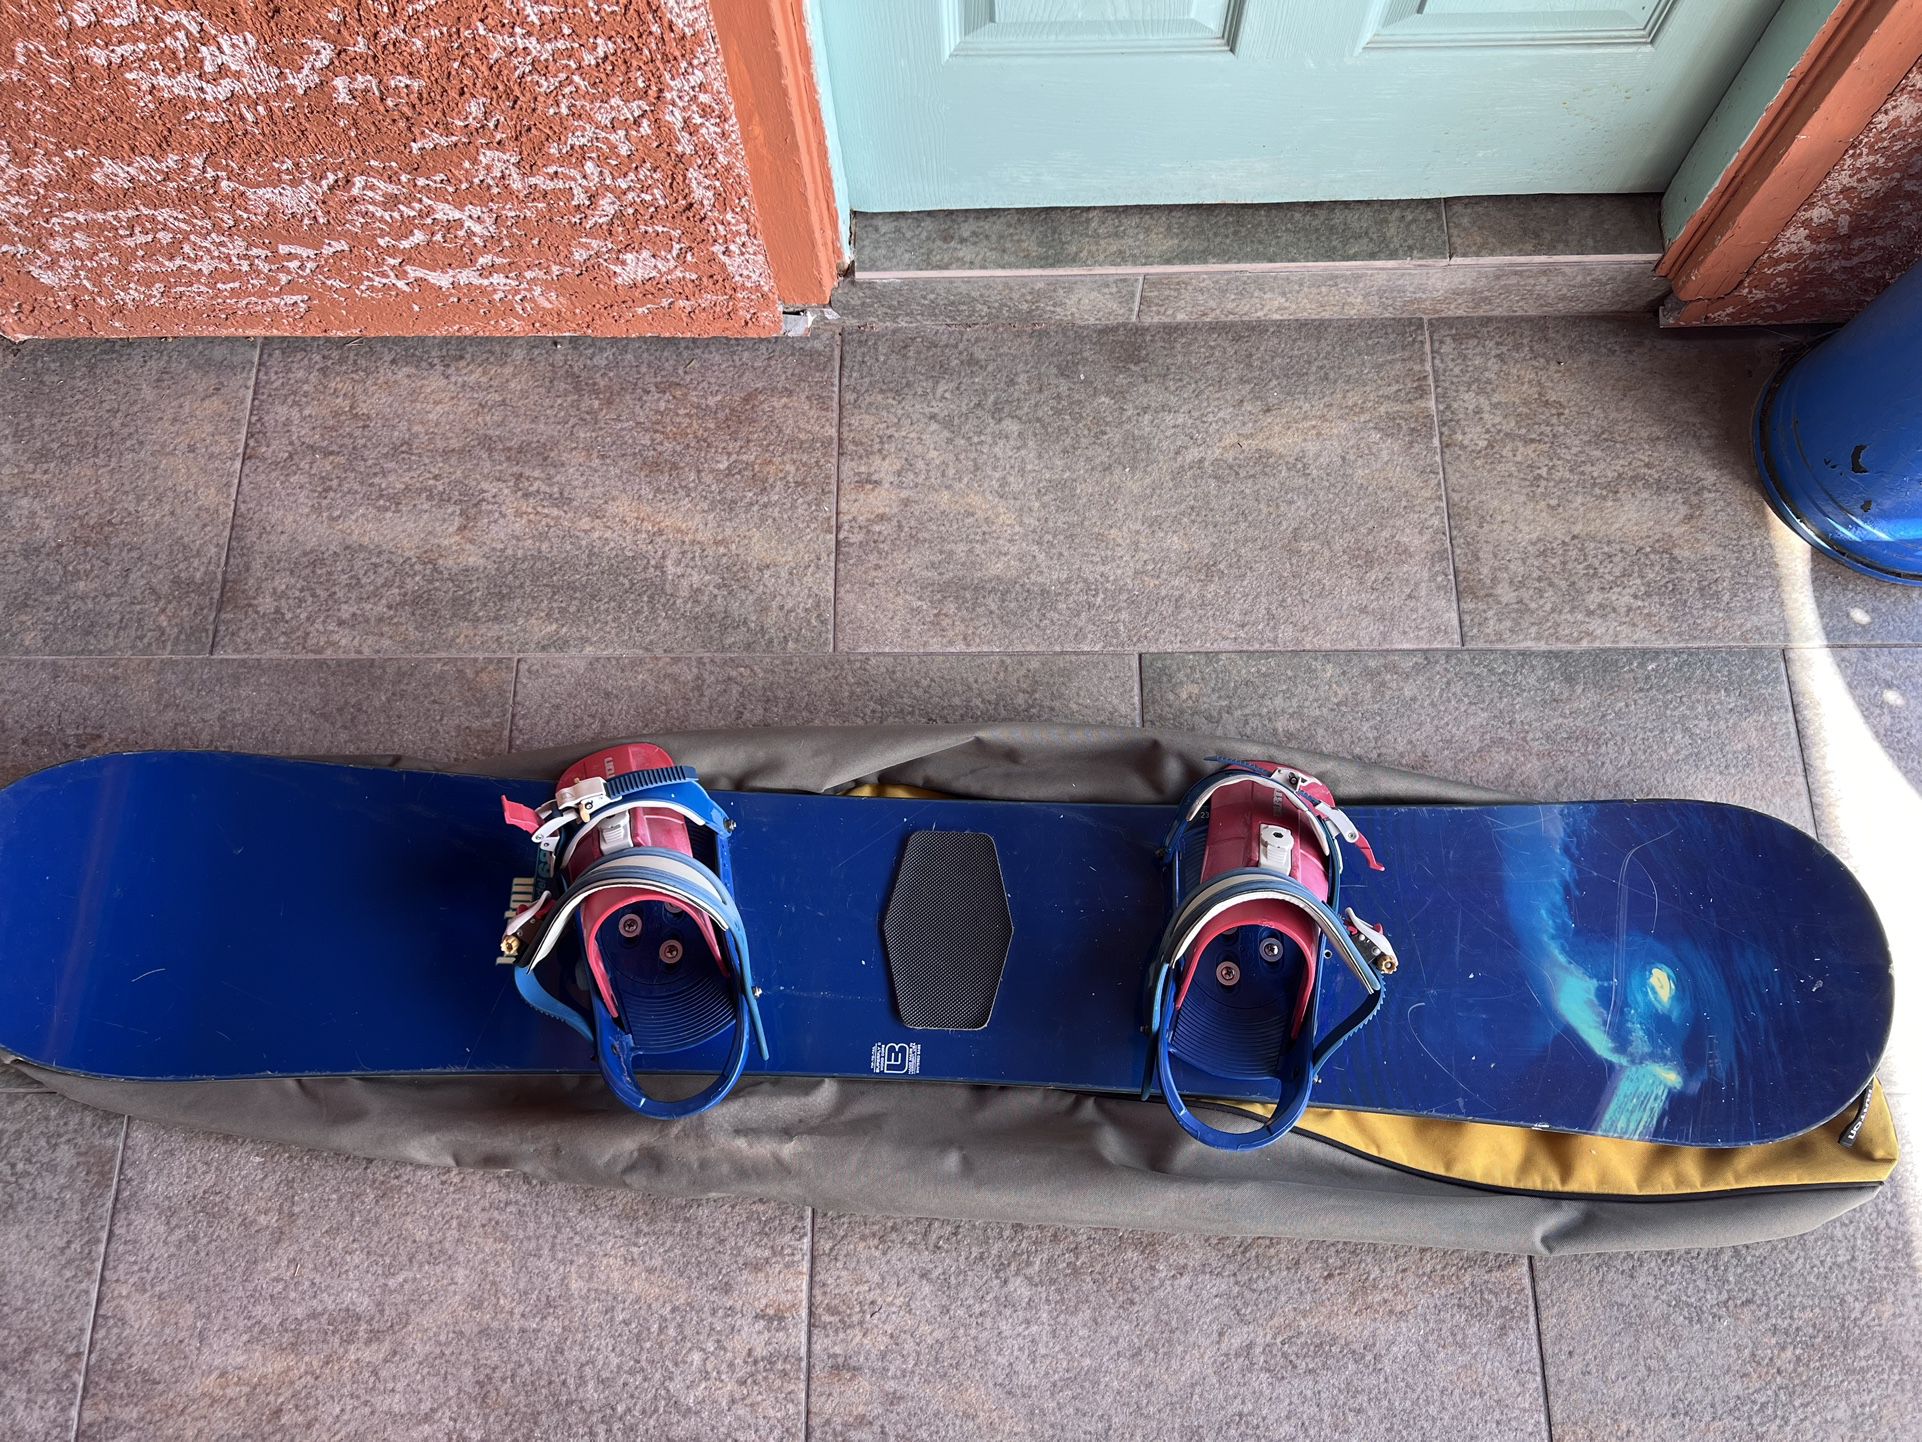 Burton Supermodel 162 Snowboard With Binding And Bag